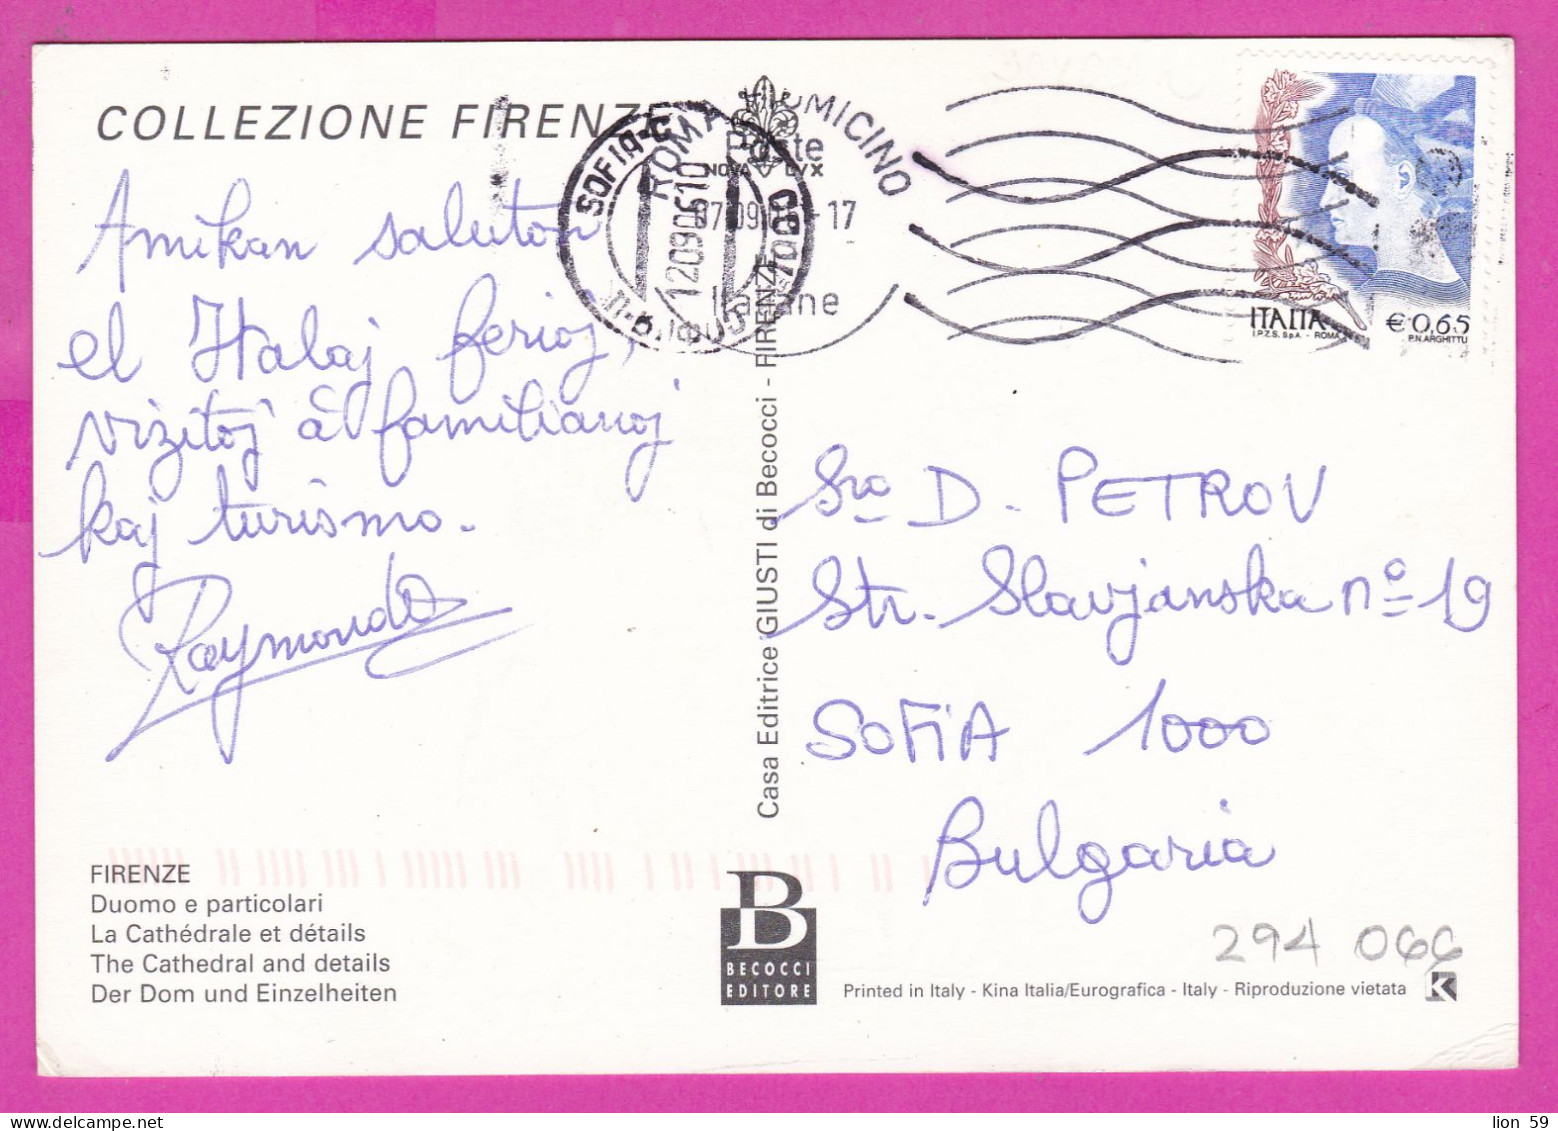 294066 / Italy - FIRENZE - Duomo E Particolari PC 2006 USED 0.65 € Woman In Art P.N.Arghittu Engraving - 2001-10: Marcophilia